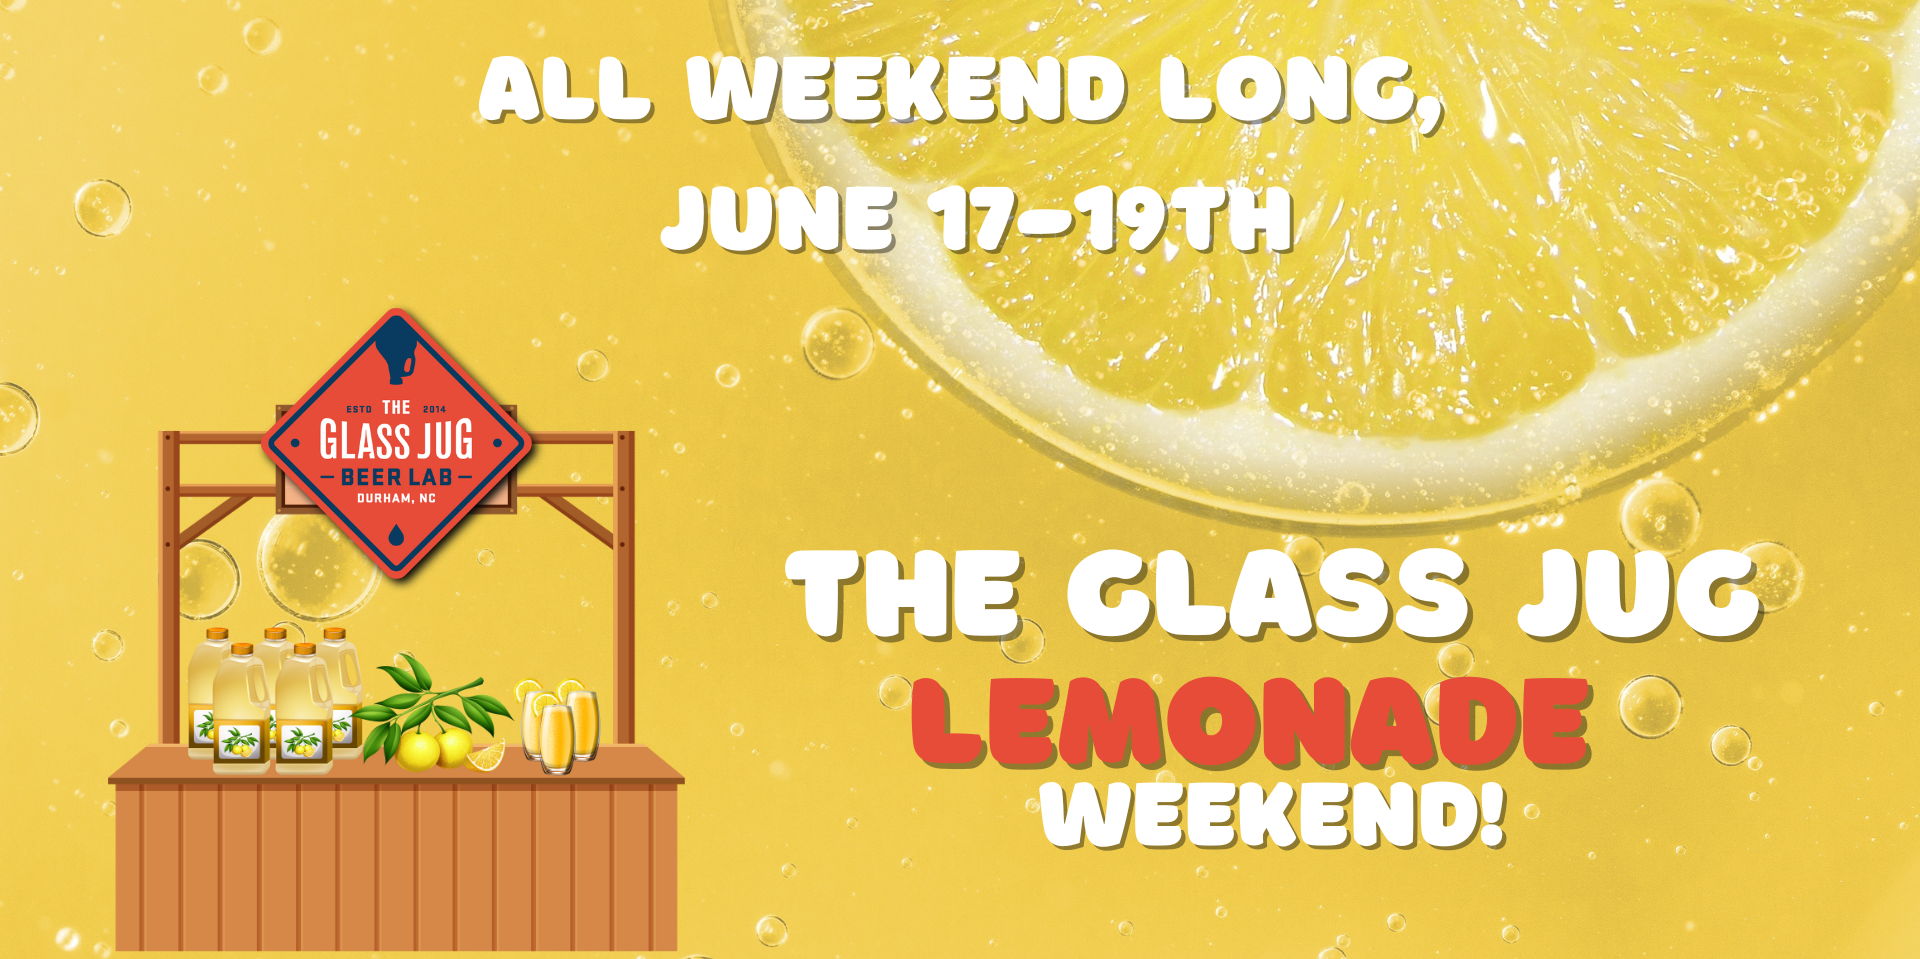 The Glass Jug Lemonade Weekend - Downtown promotional image